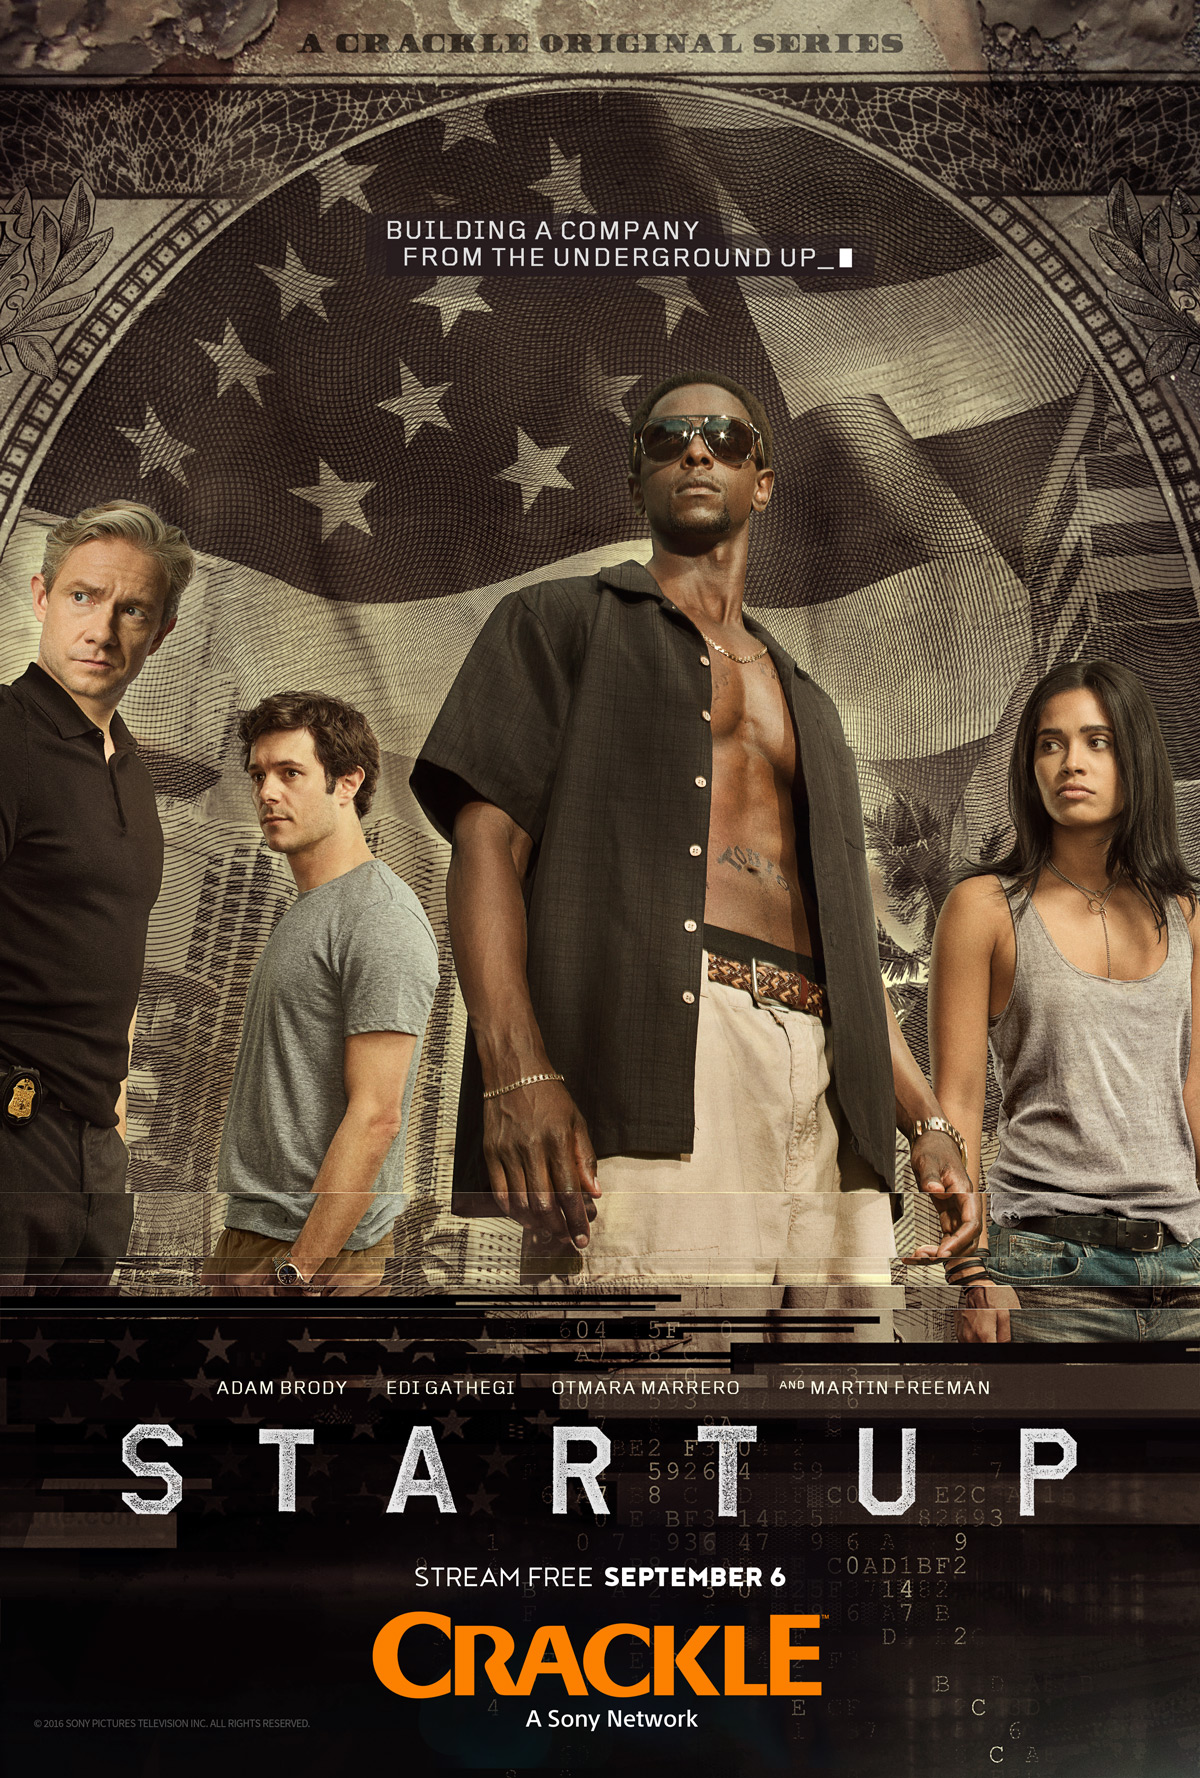 Edi Gathegi Talks New Crackle Web Series, StartUp - blackfilm.com